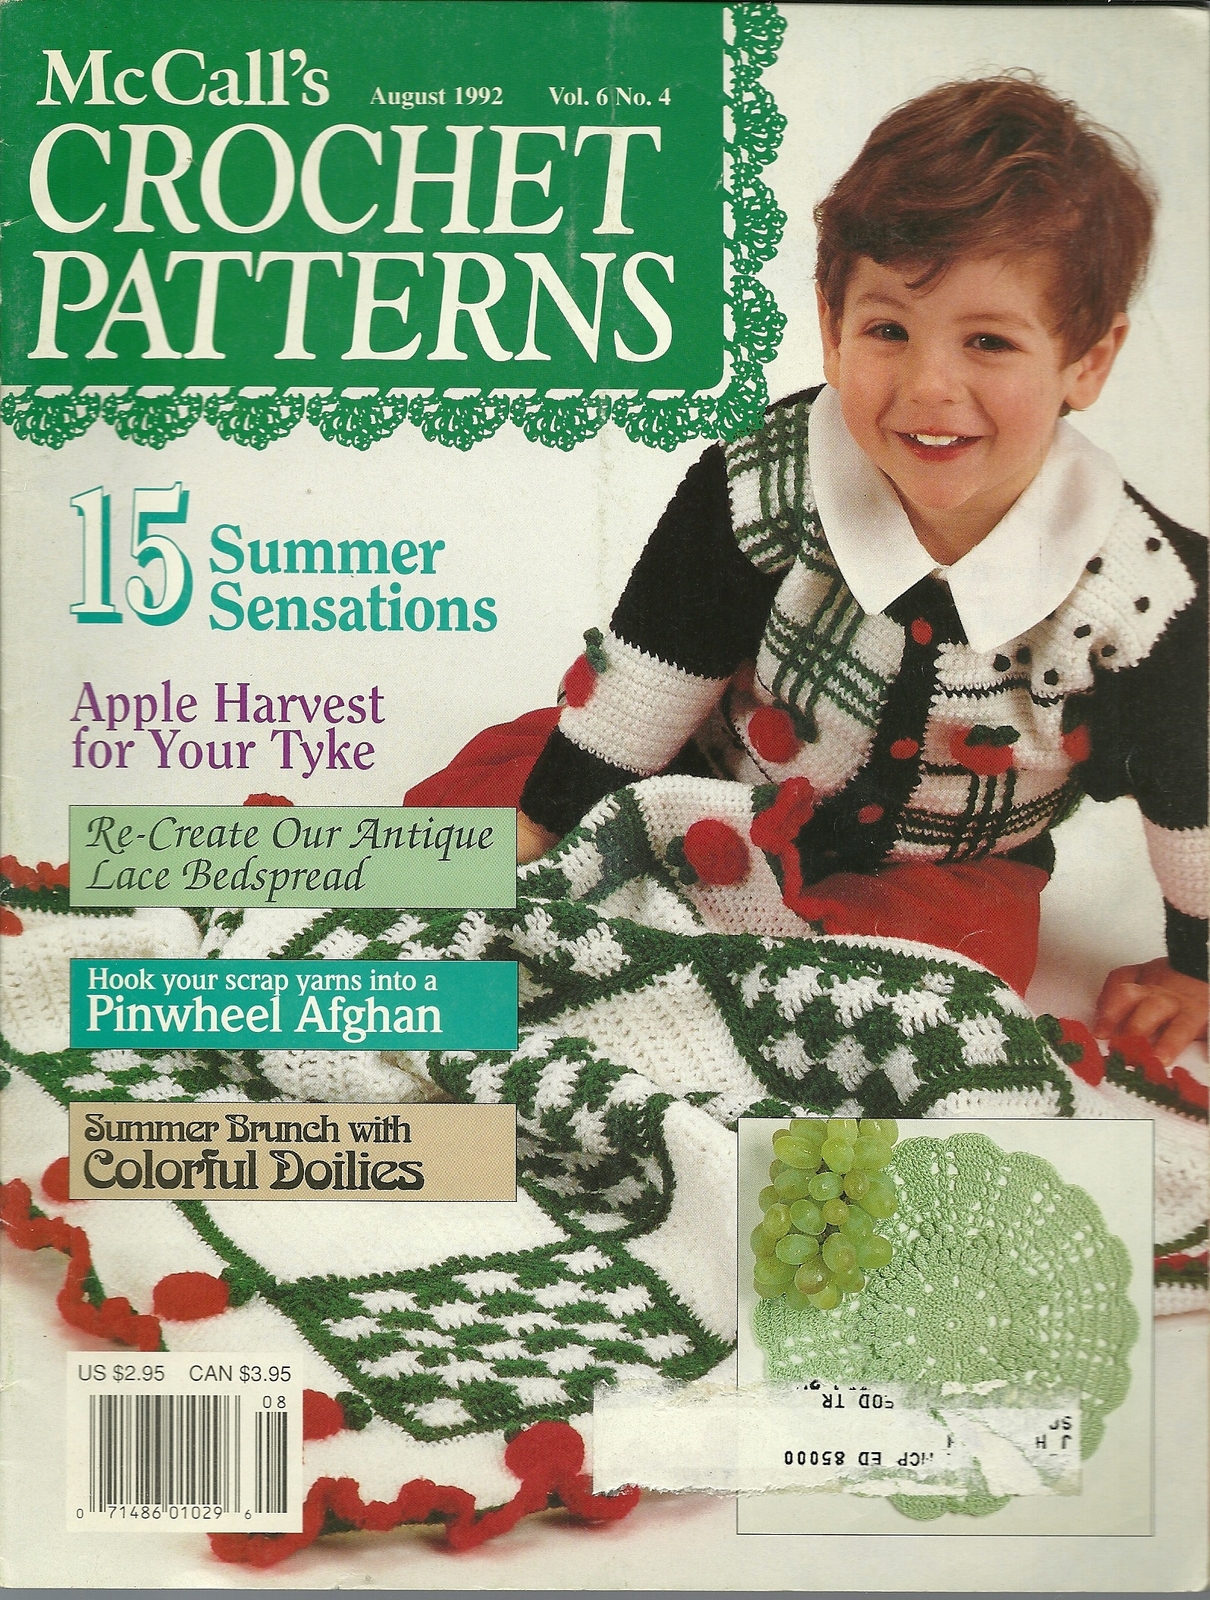 McCall's Crochet Patterns Magazine August 1992 Vol. 6 No. 4 - $6.99